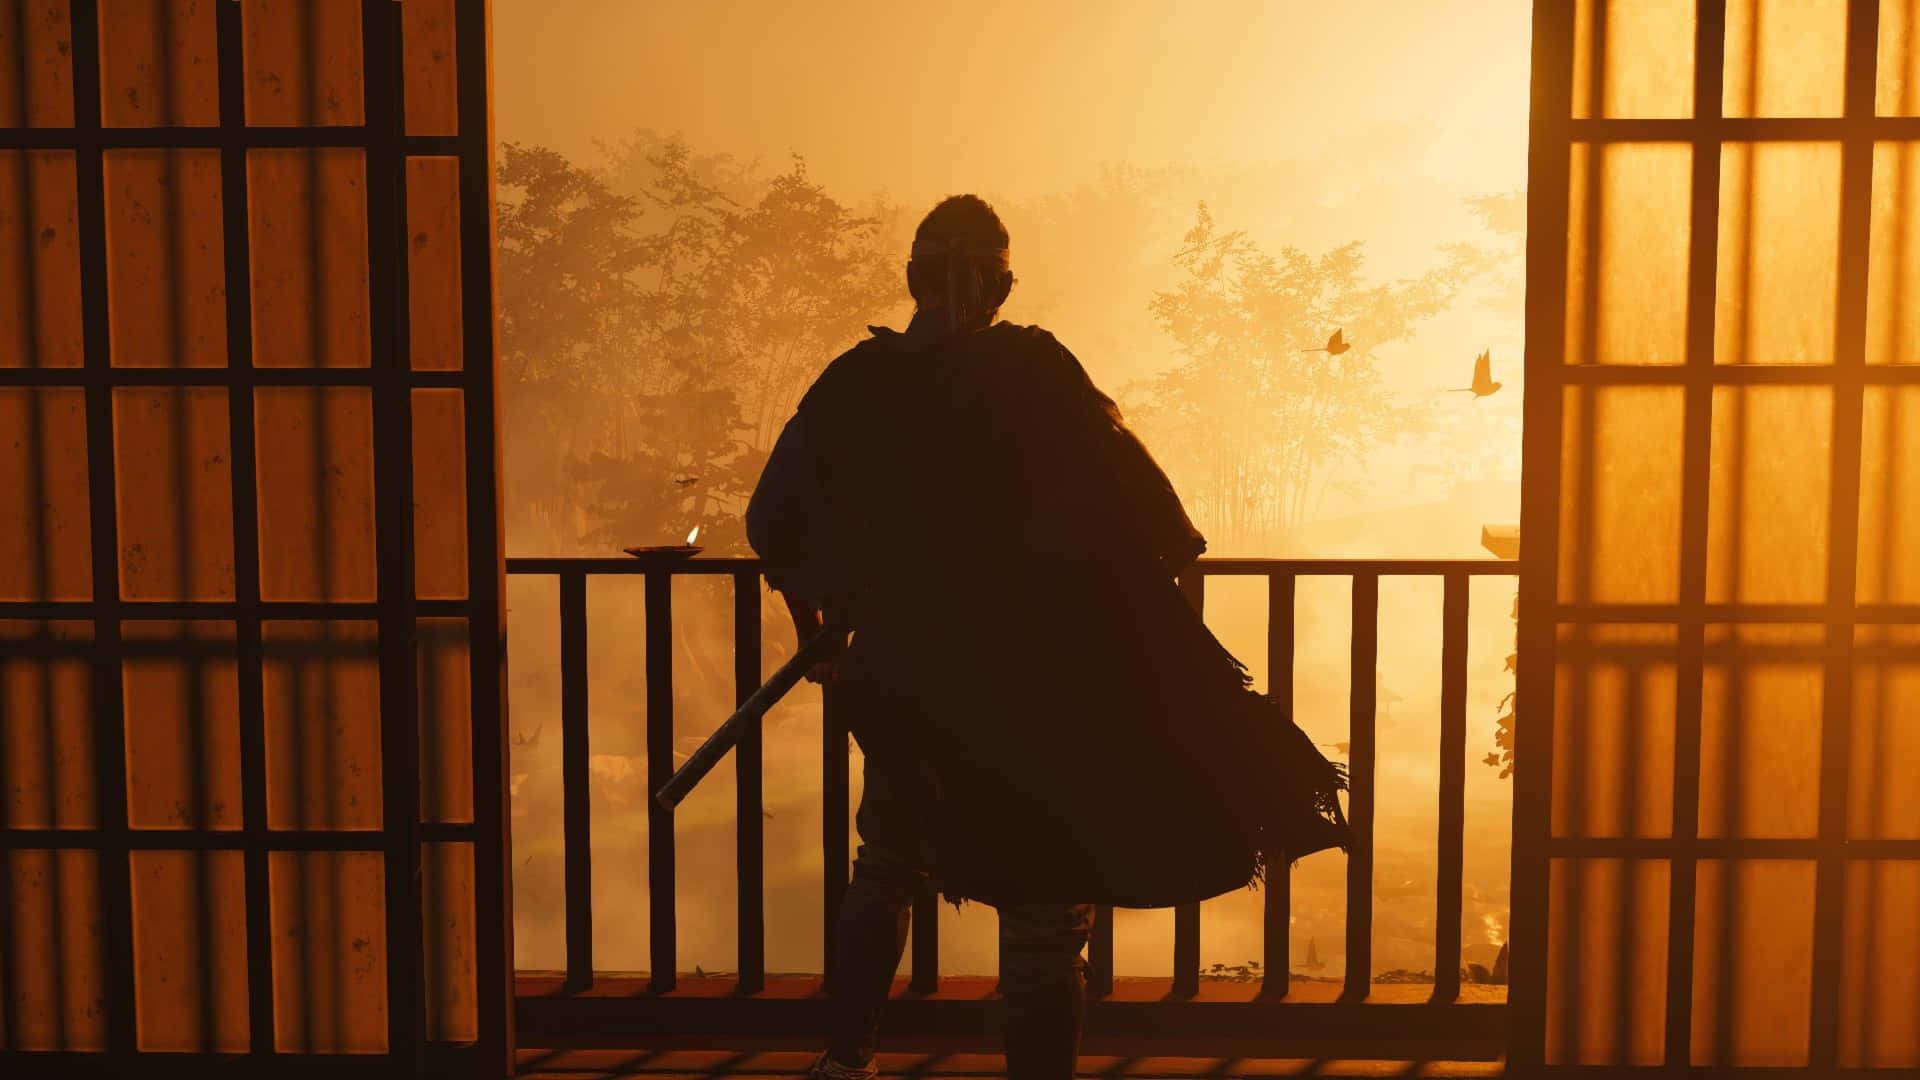 The Journey of a Samurai